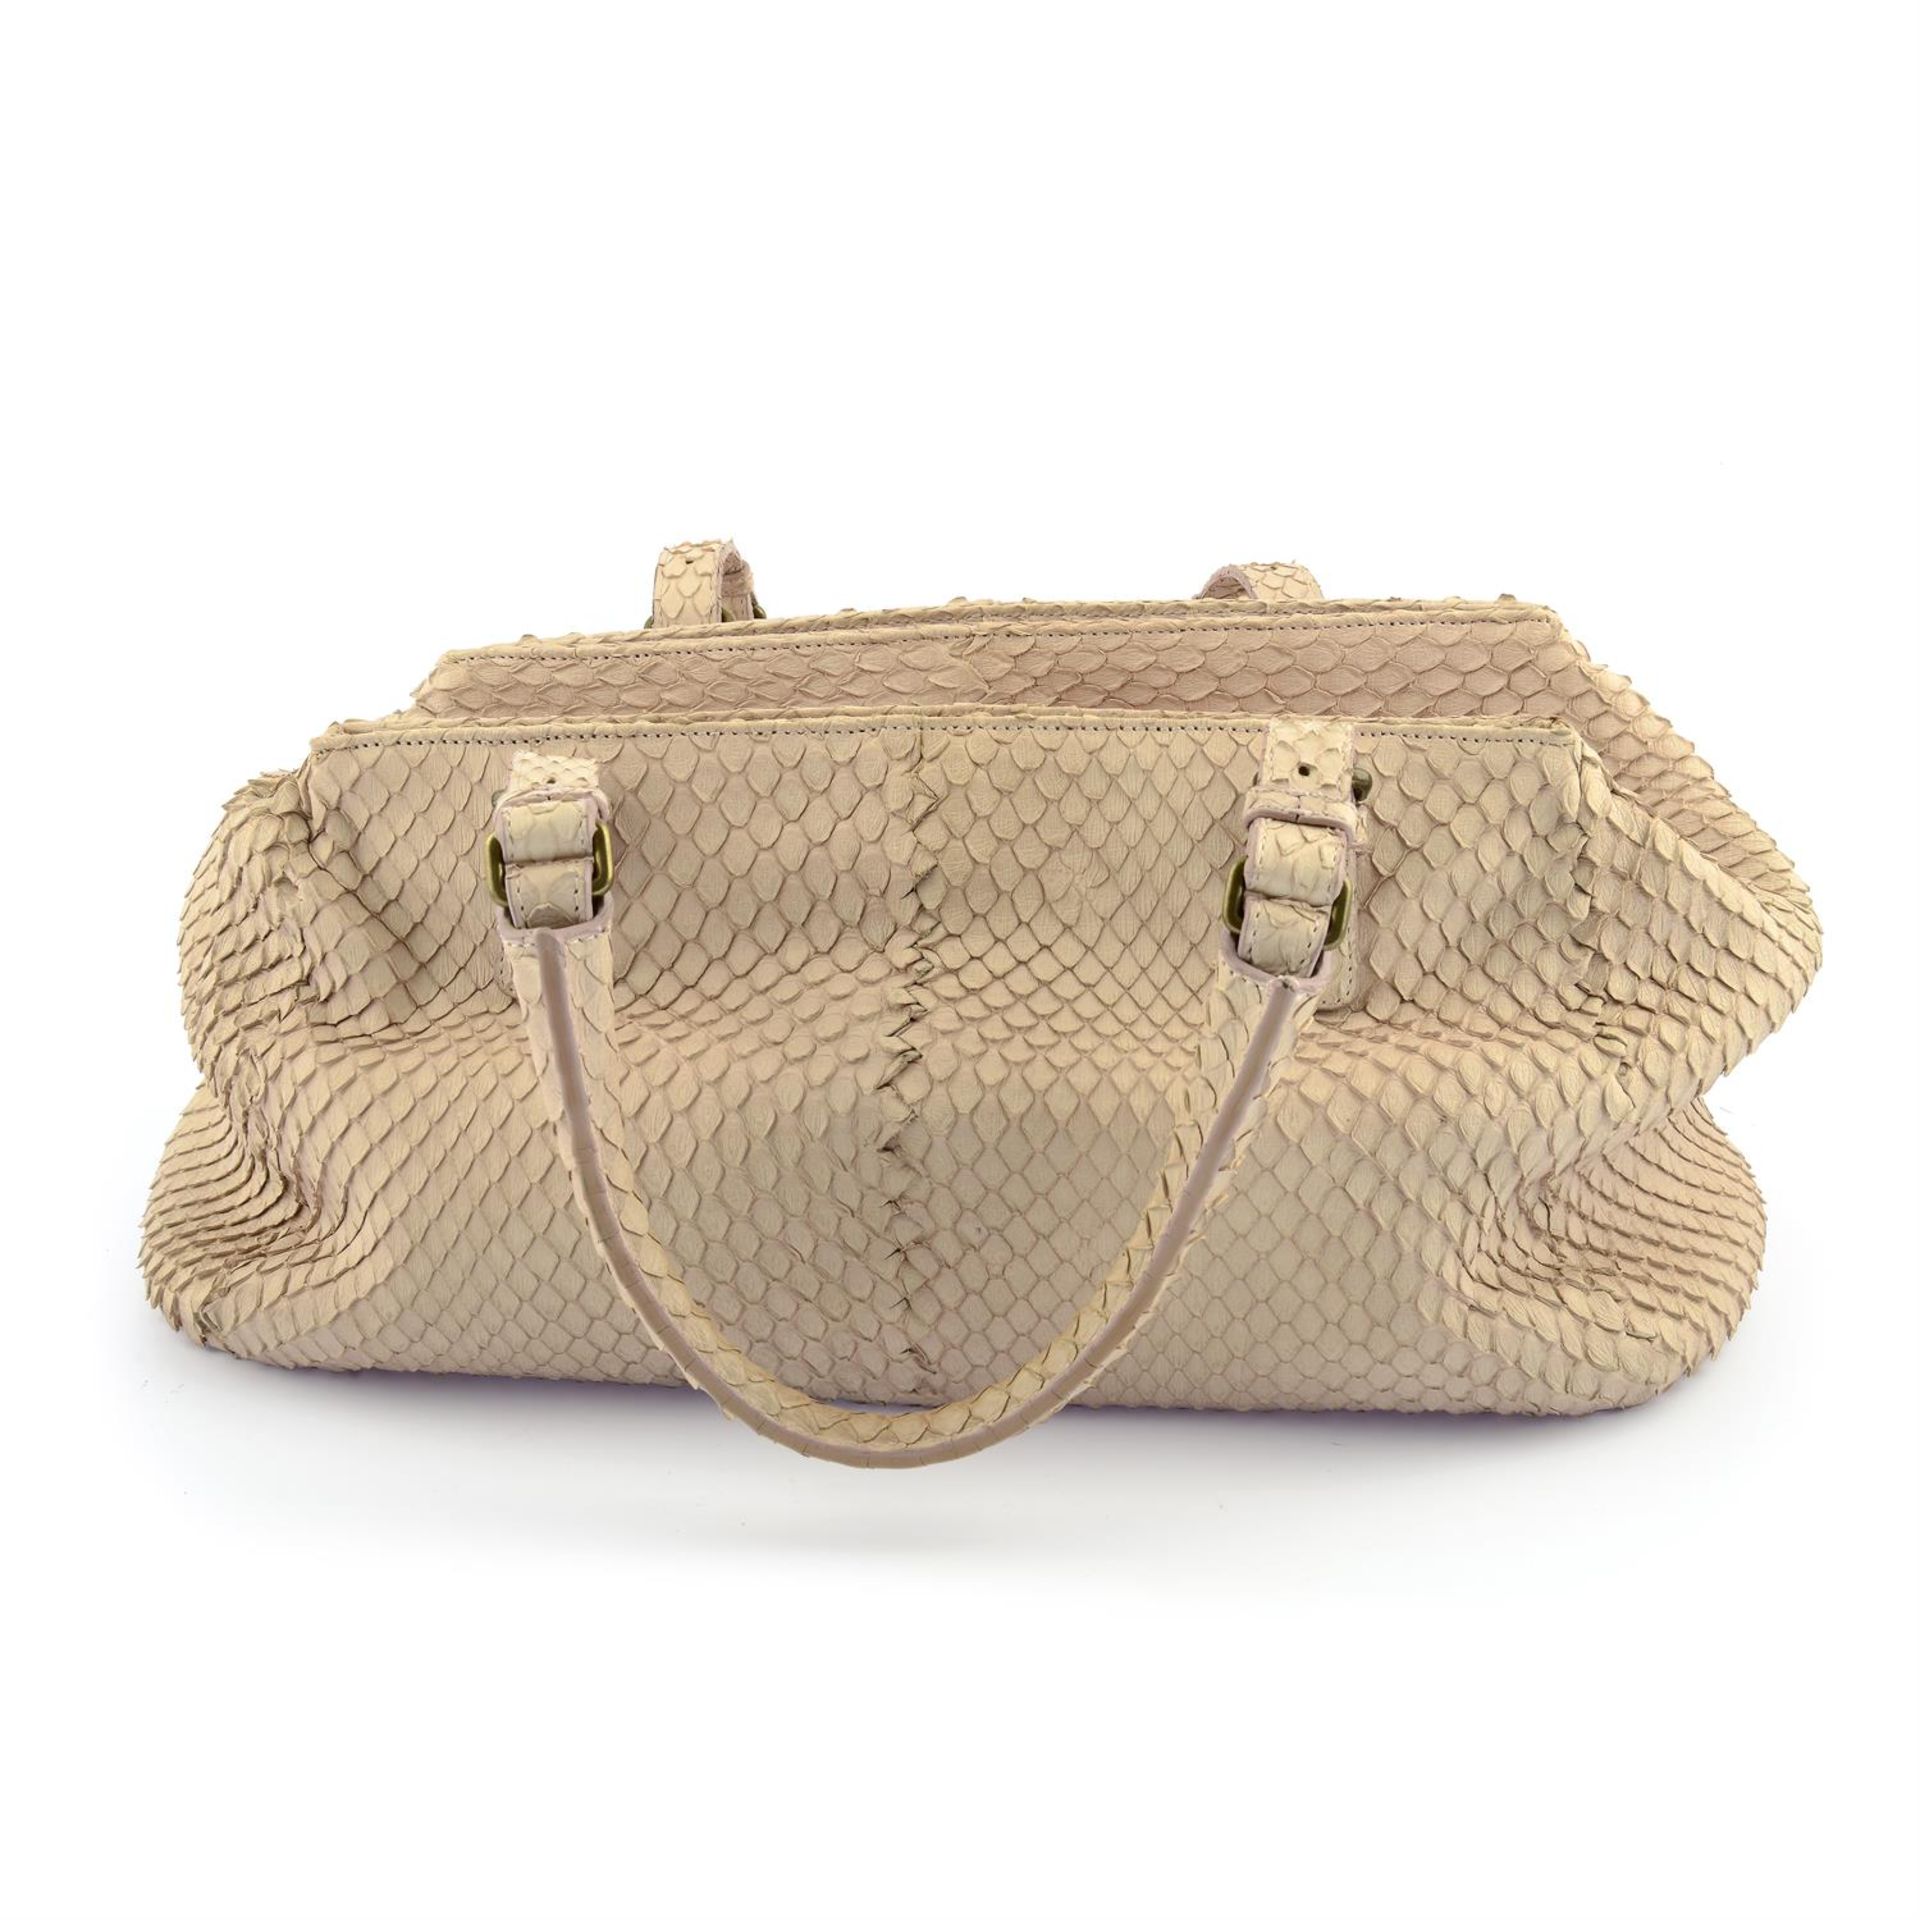 BOTTEGA VENETA - a beige Python leather handbag. - Bild 2 aus 6